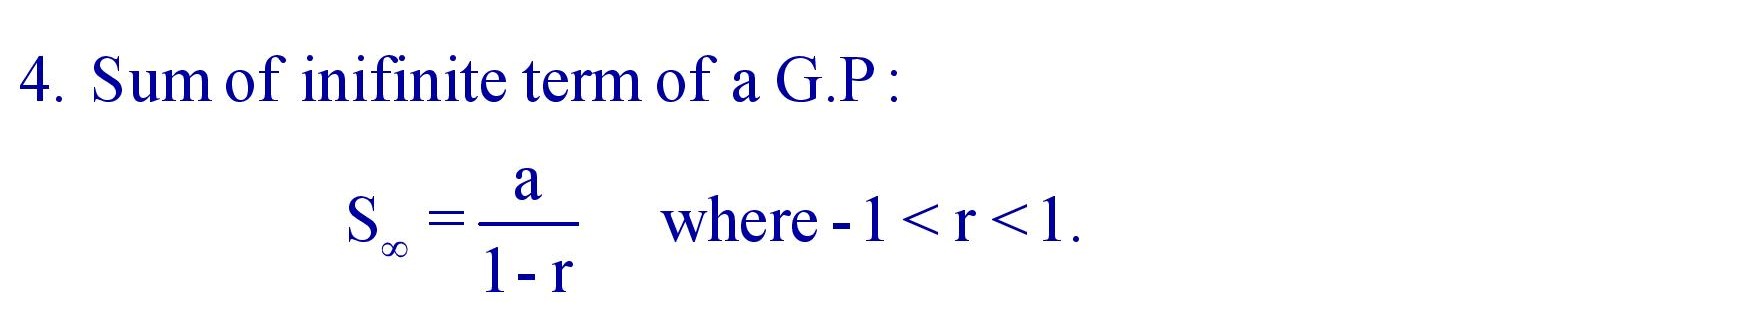 Sum of infinite term of a G.P